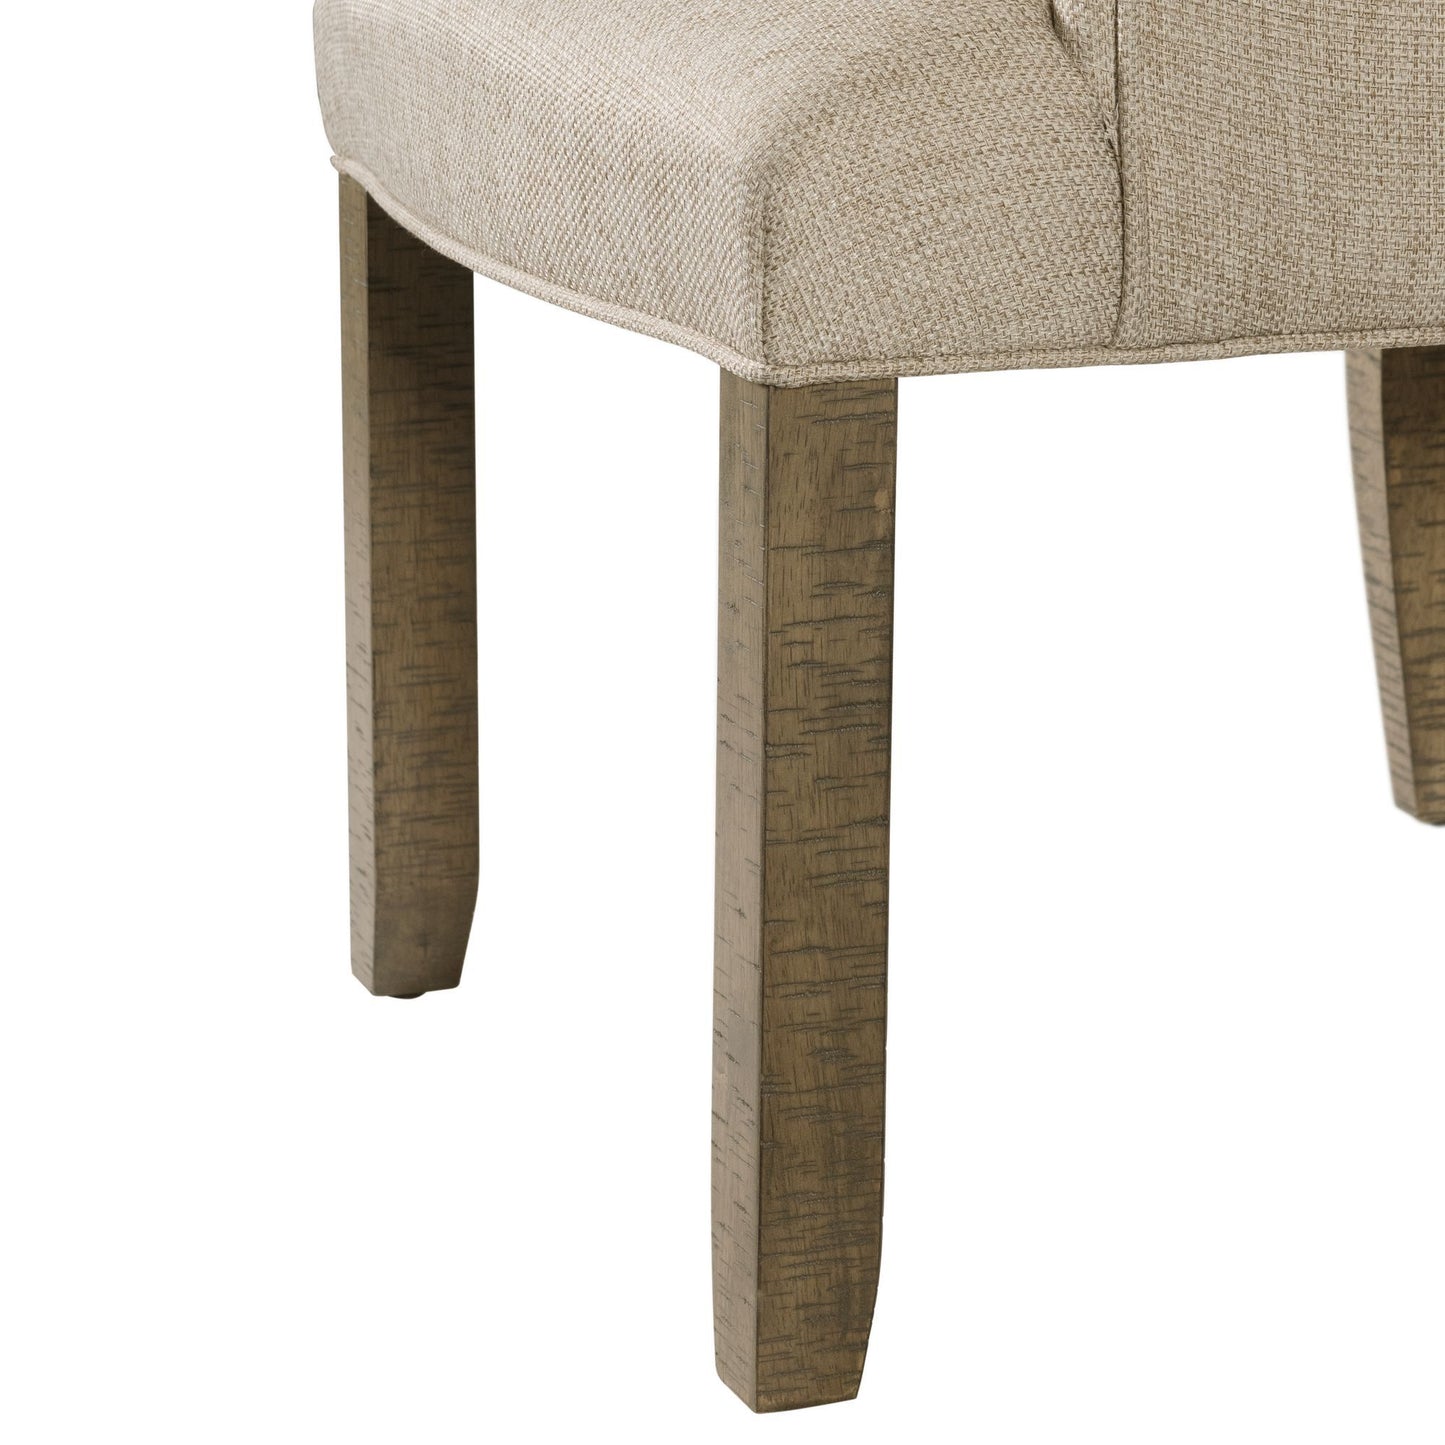 Stone - Standard Height Parson Chair (Set of 2) - Dark Grey Finish